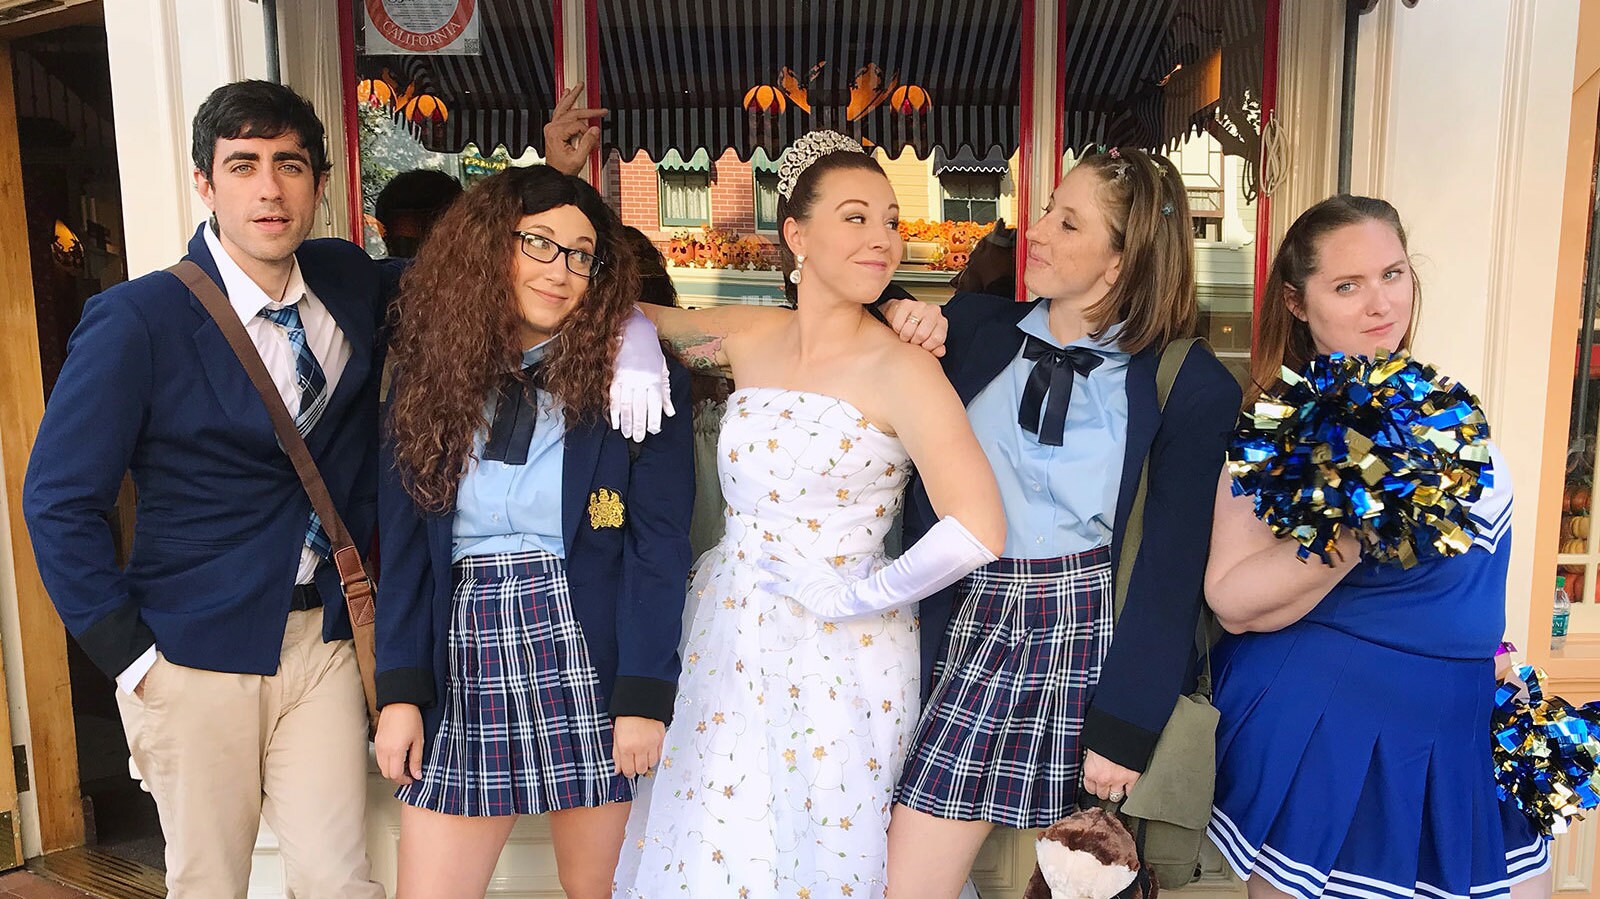 Shut Up! Shut Up! This Princess Diaries Group Halloween Costume is So Good